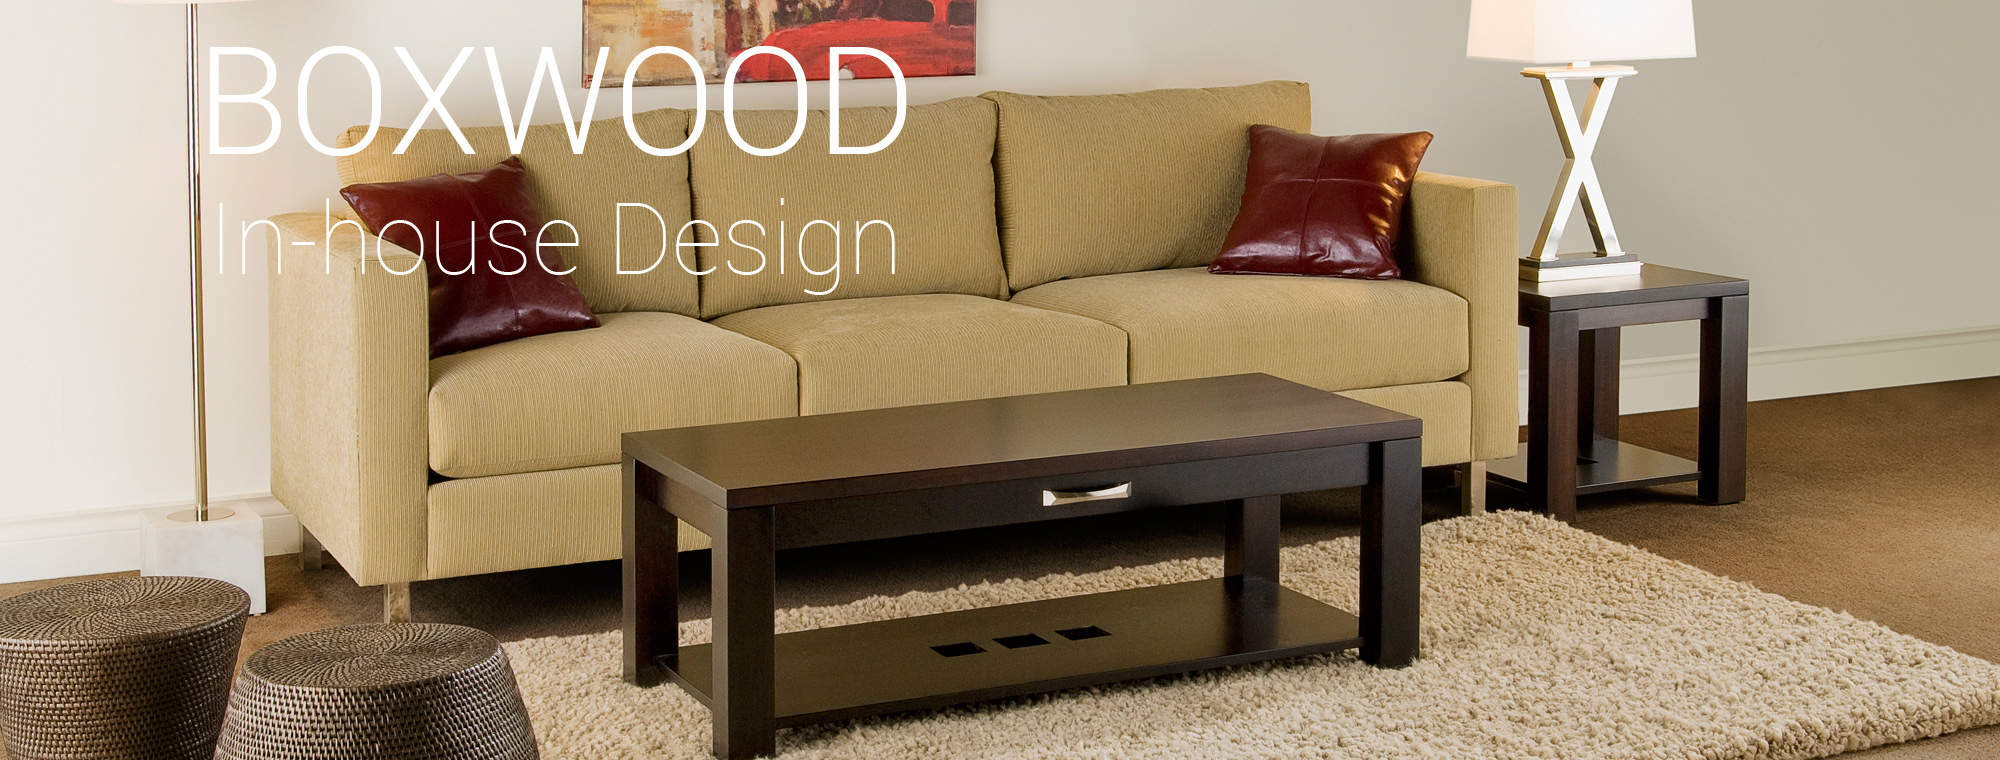 Boxwood solid wood furniture design line